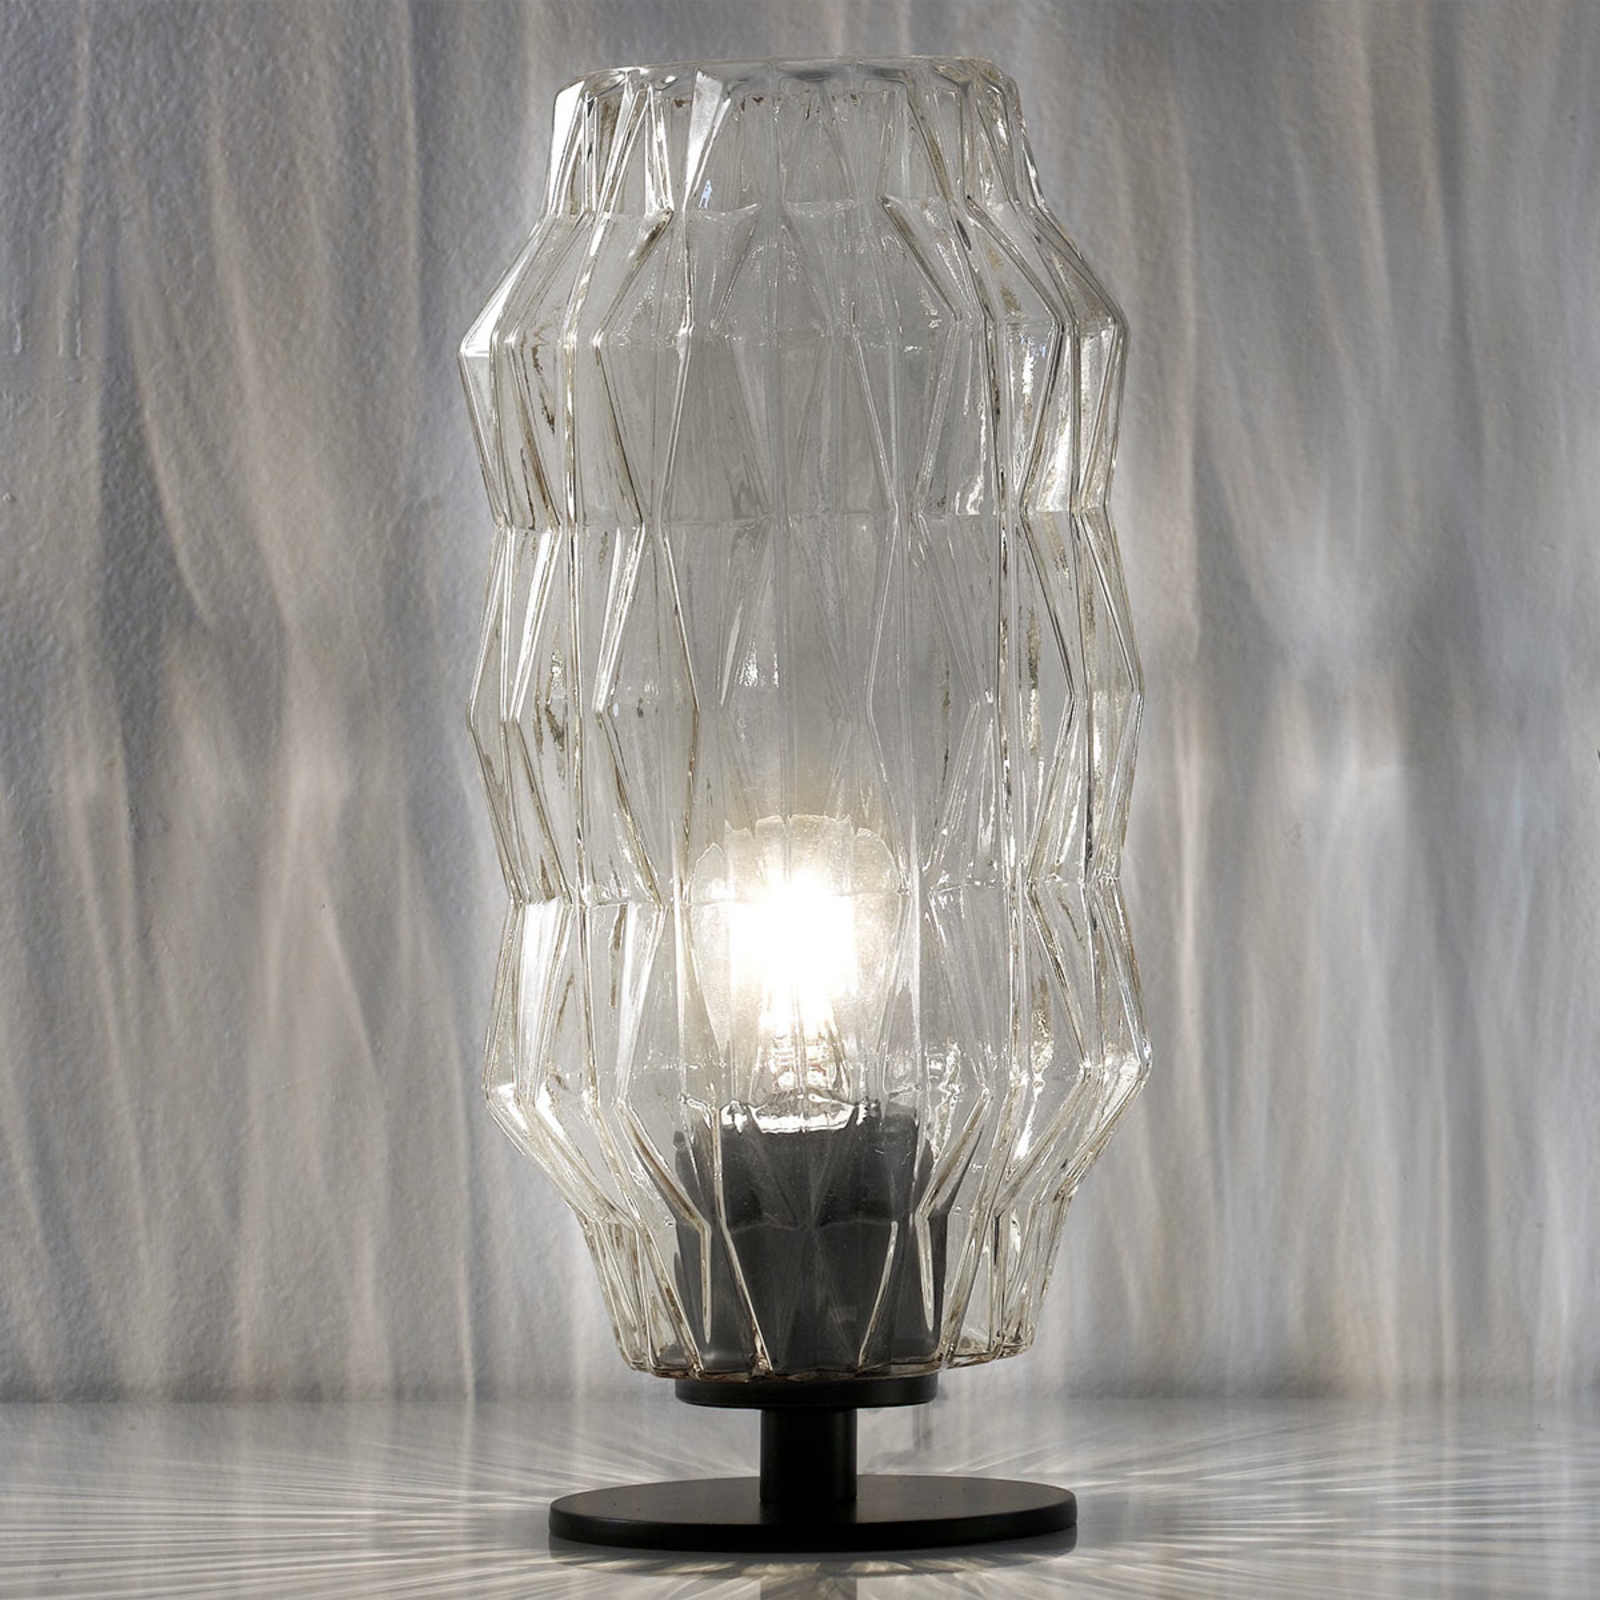 Origami table lamp, transparent